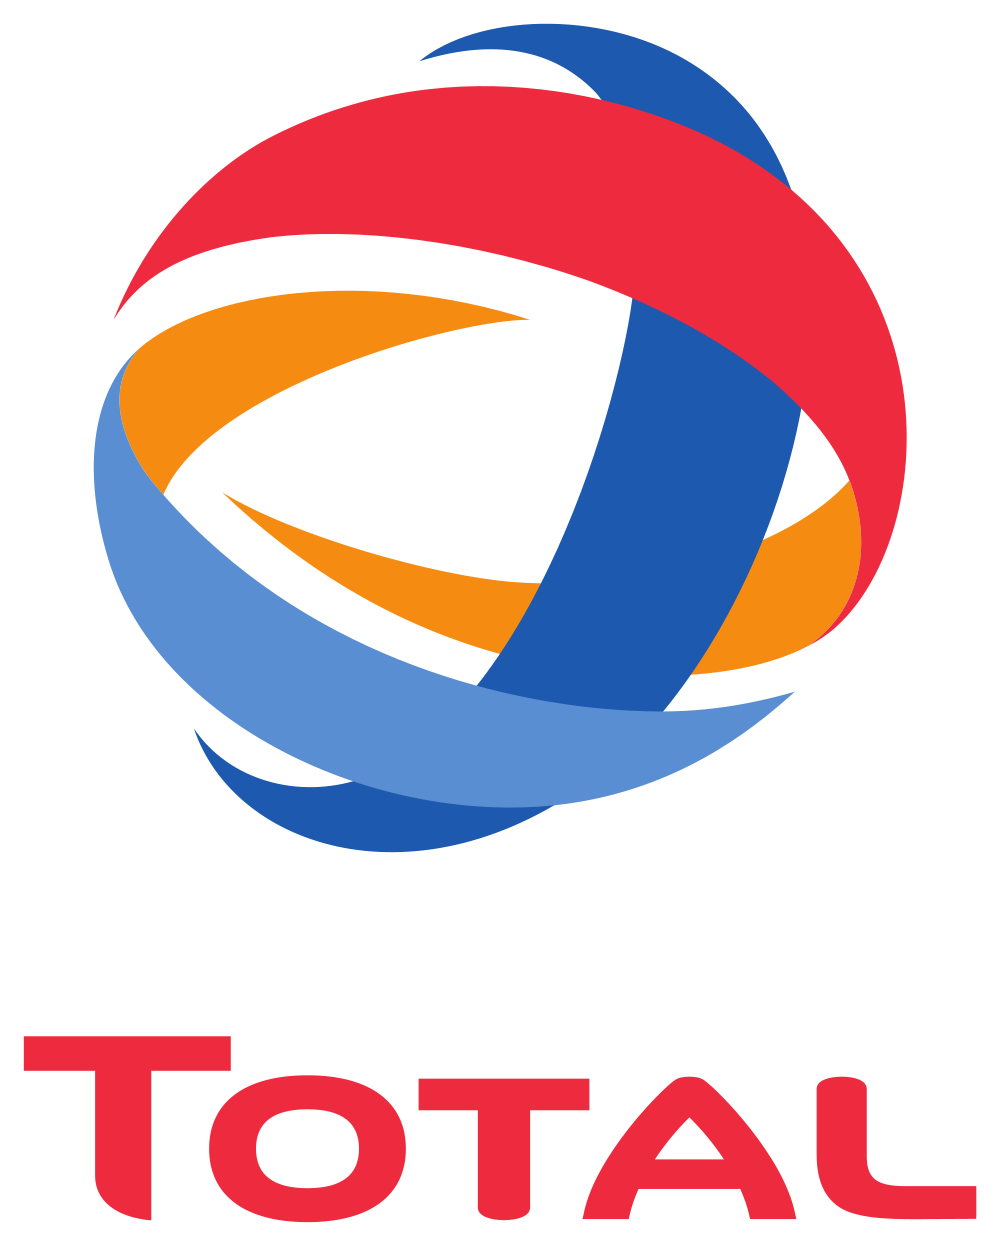 logo-total.png